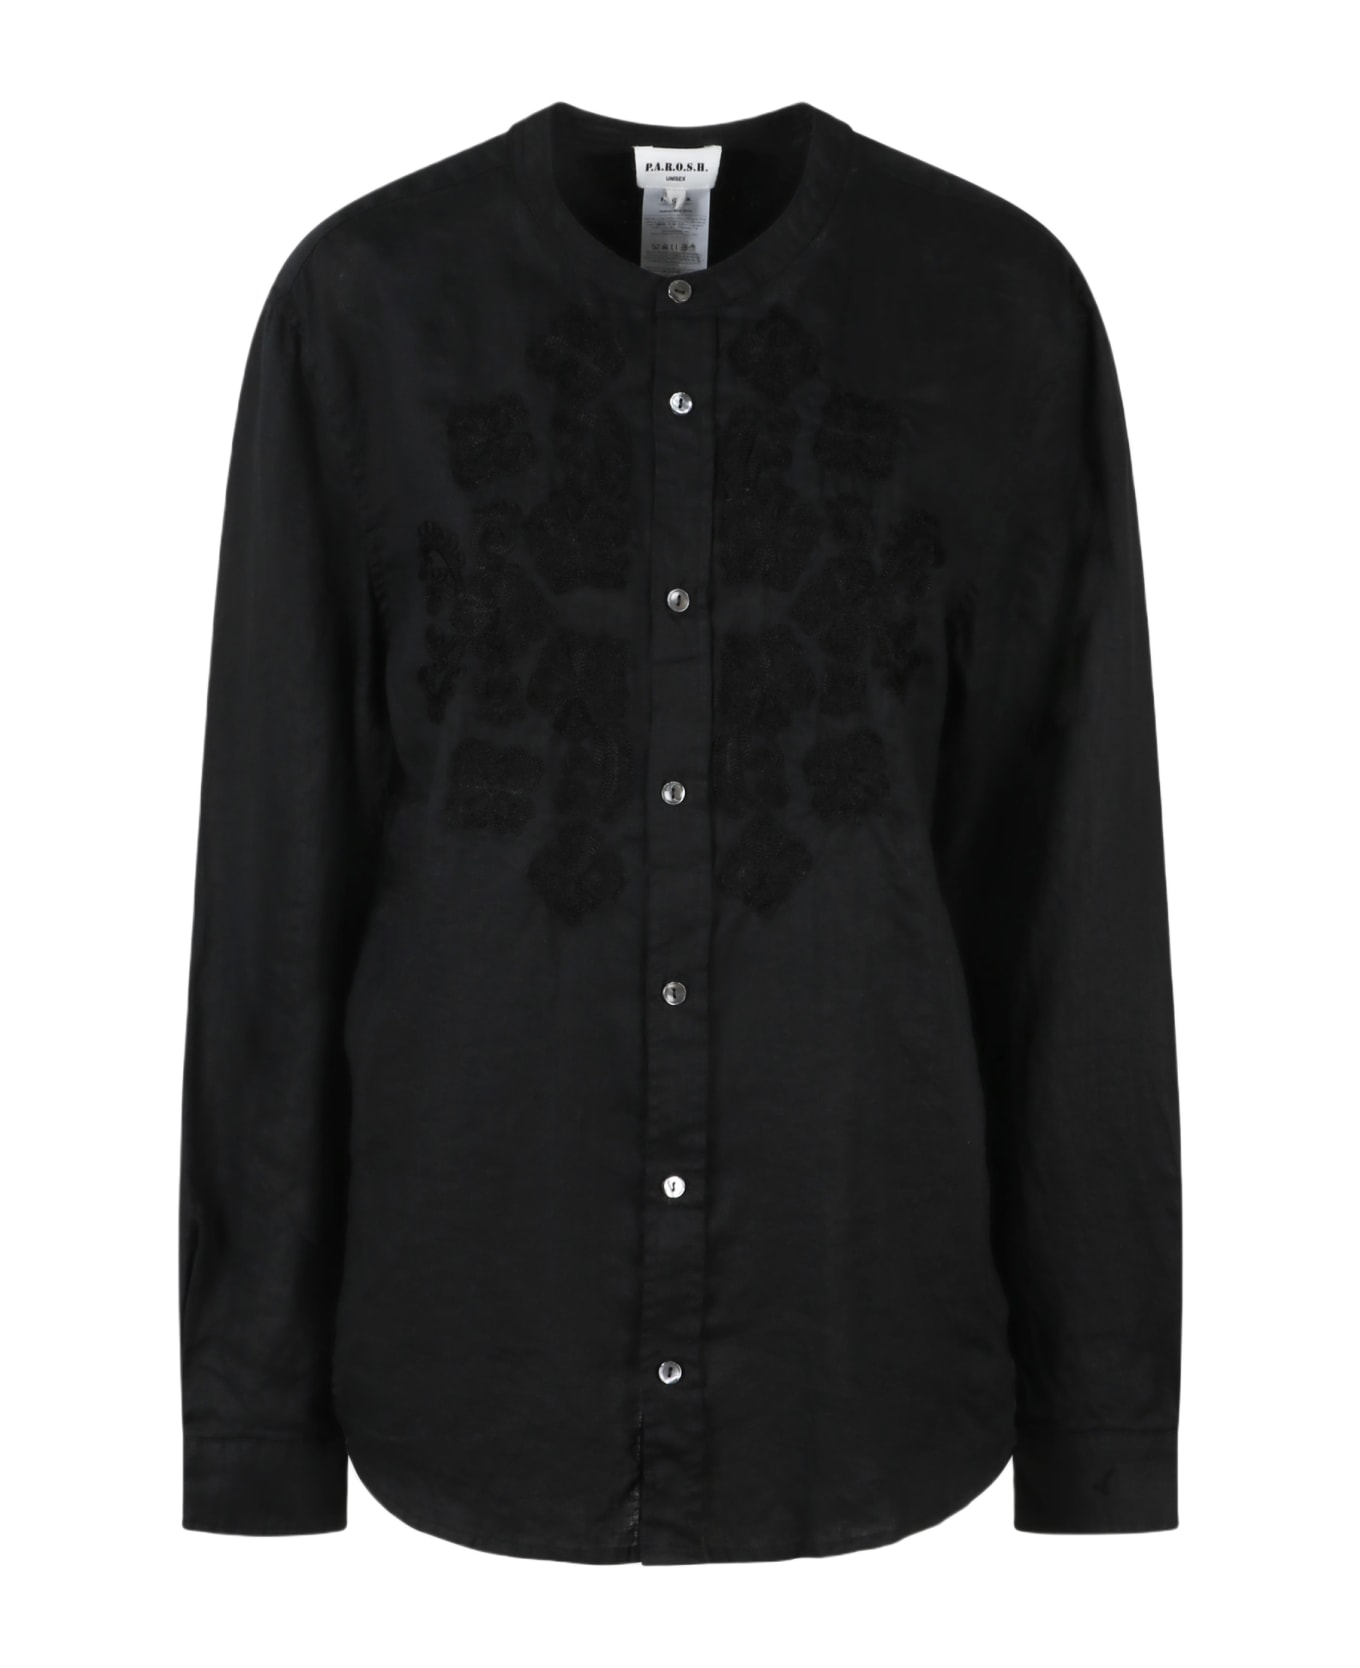 Parosh Embroidered Linen Shirt - Black